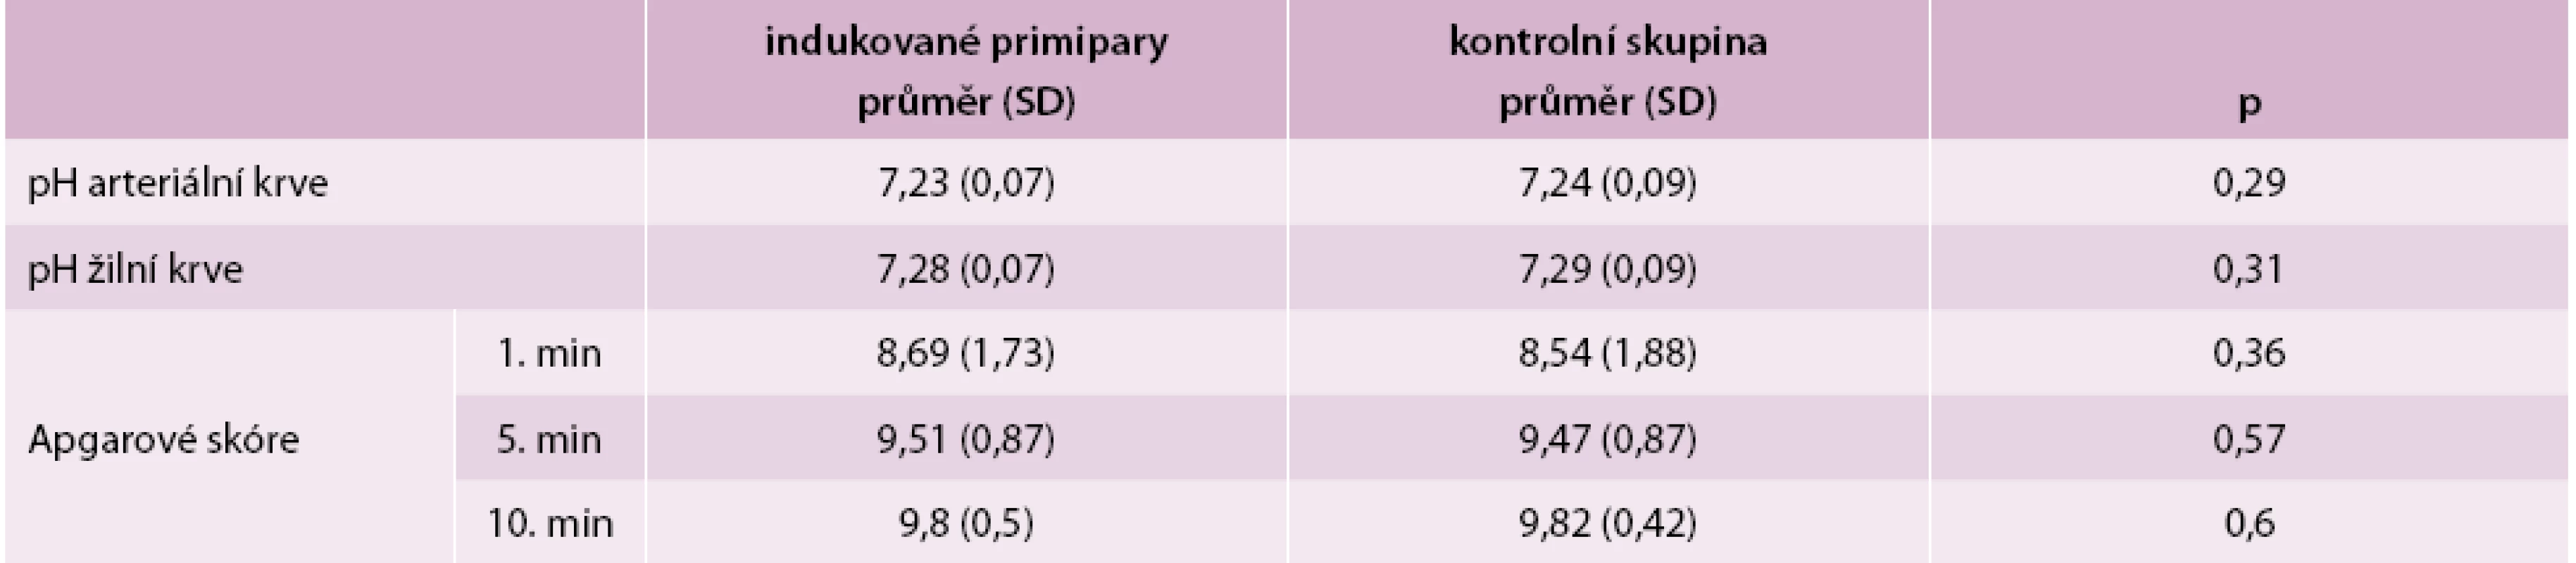 Hodnoty pH pupečníkové krve a Apgarové skóre v obou skupinách